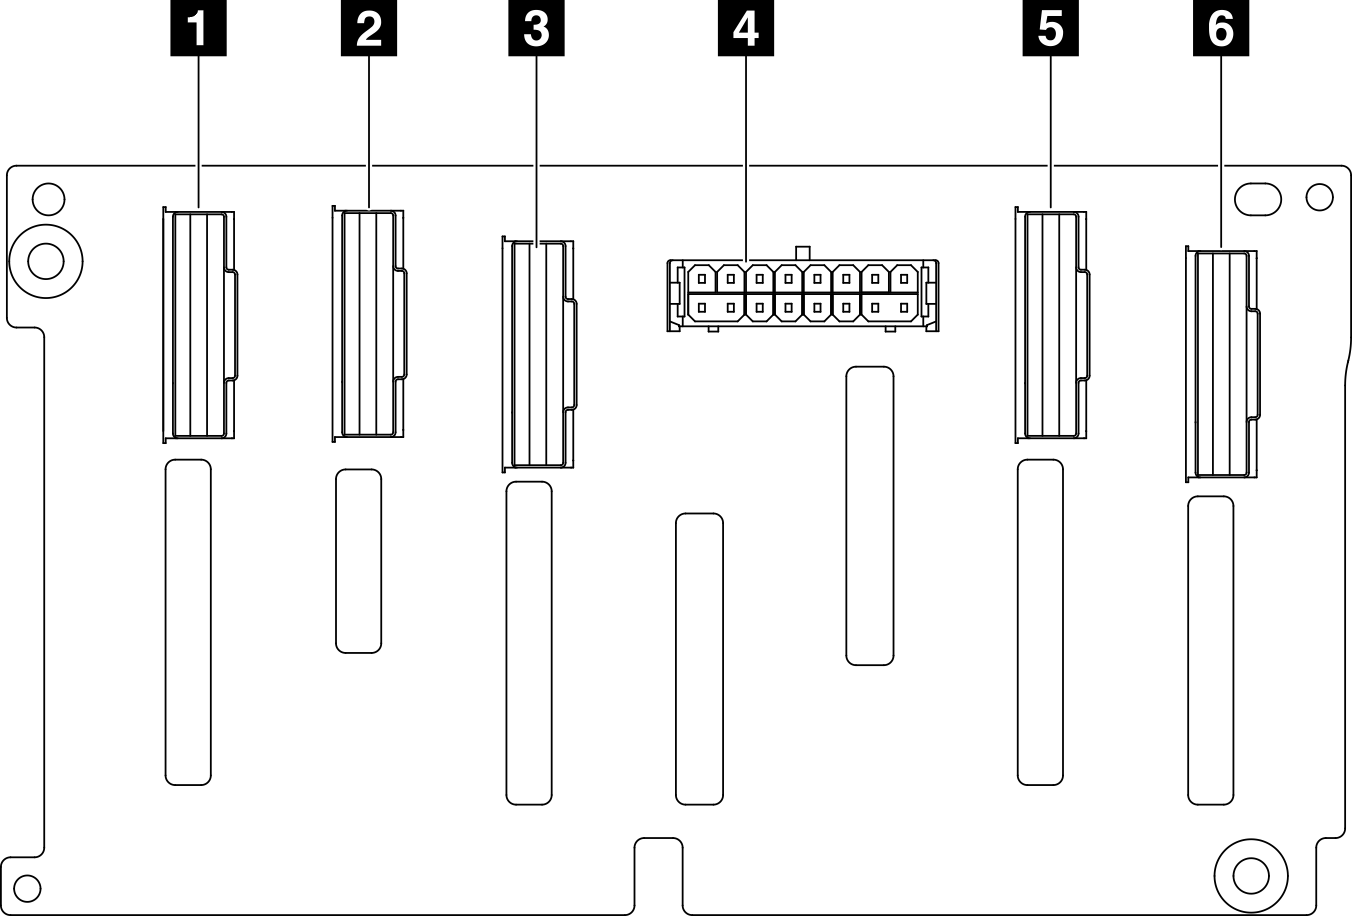 8x 2.5-inch SAS/SATA/NVMe backplane connectors